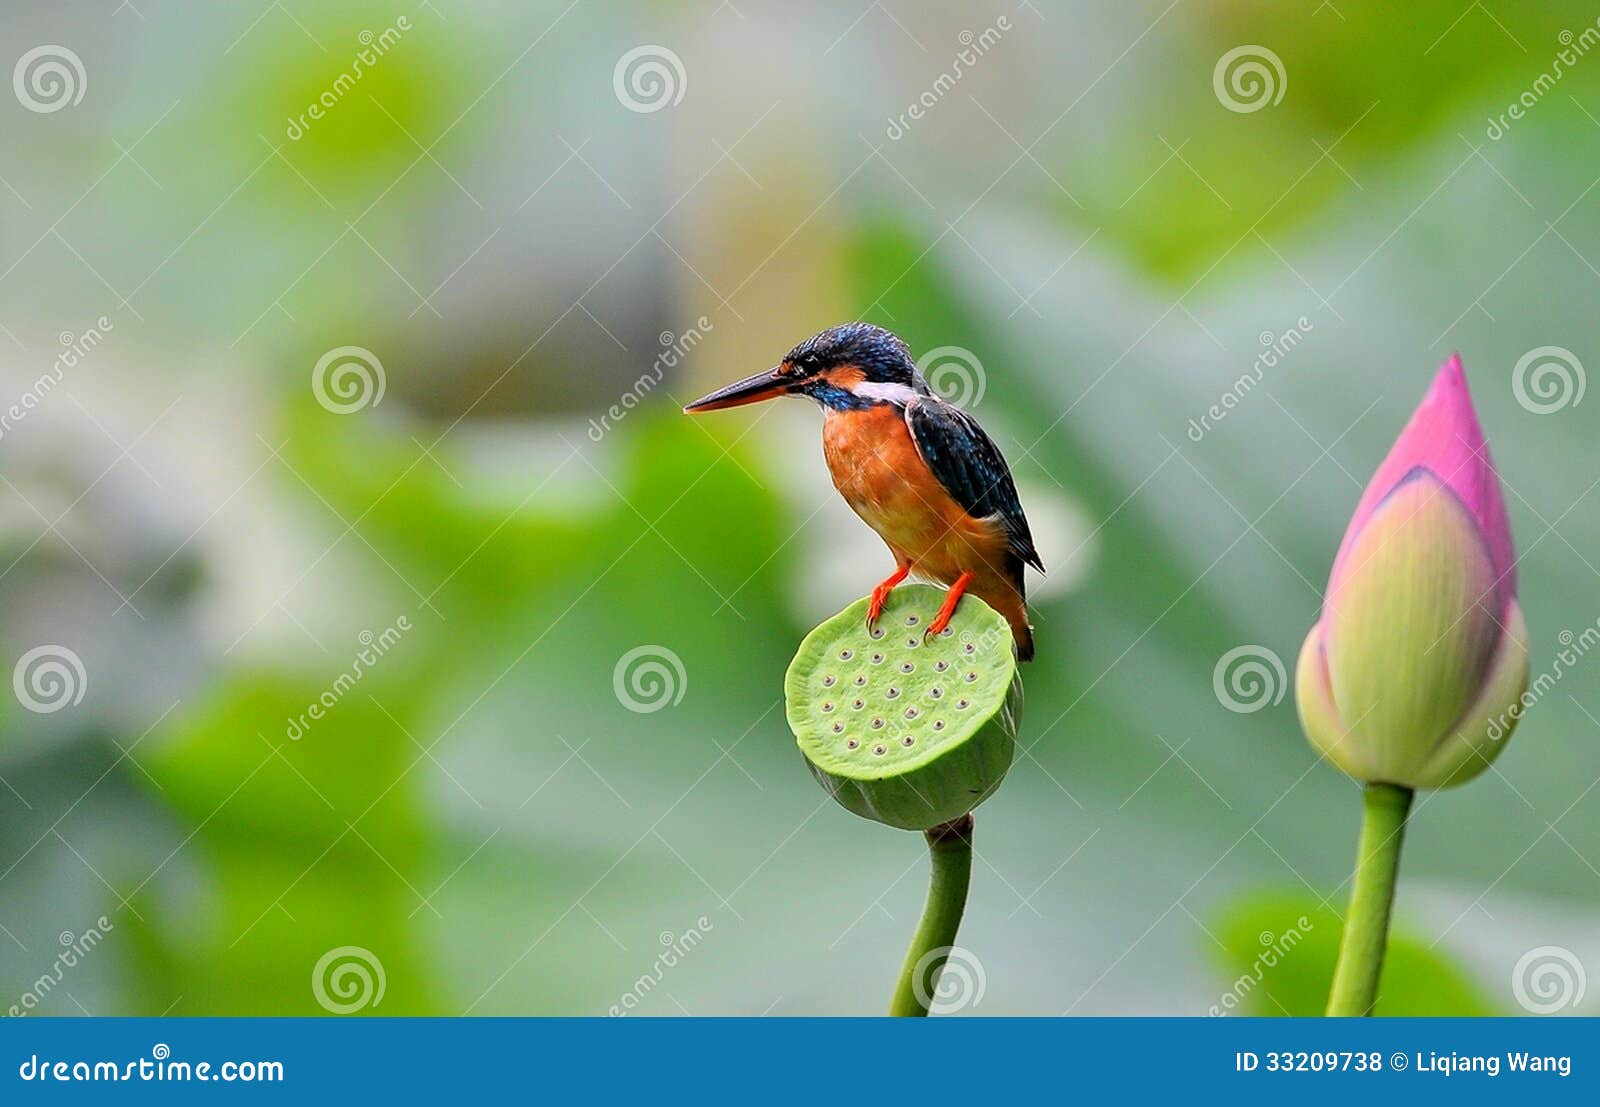 clipart kingfisher bird - photo #43